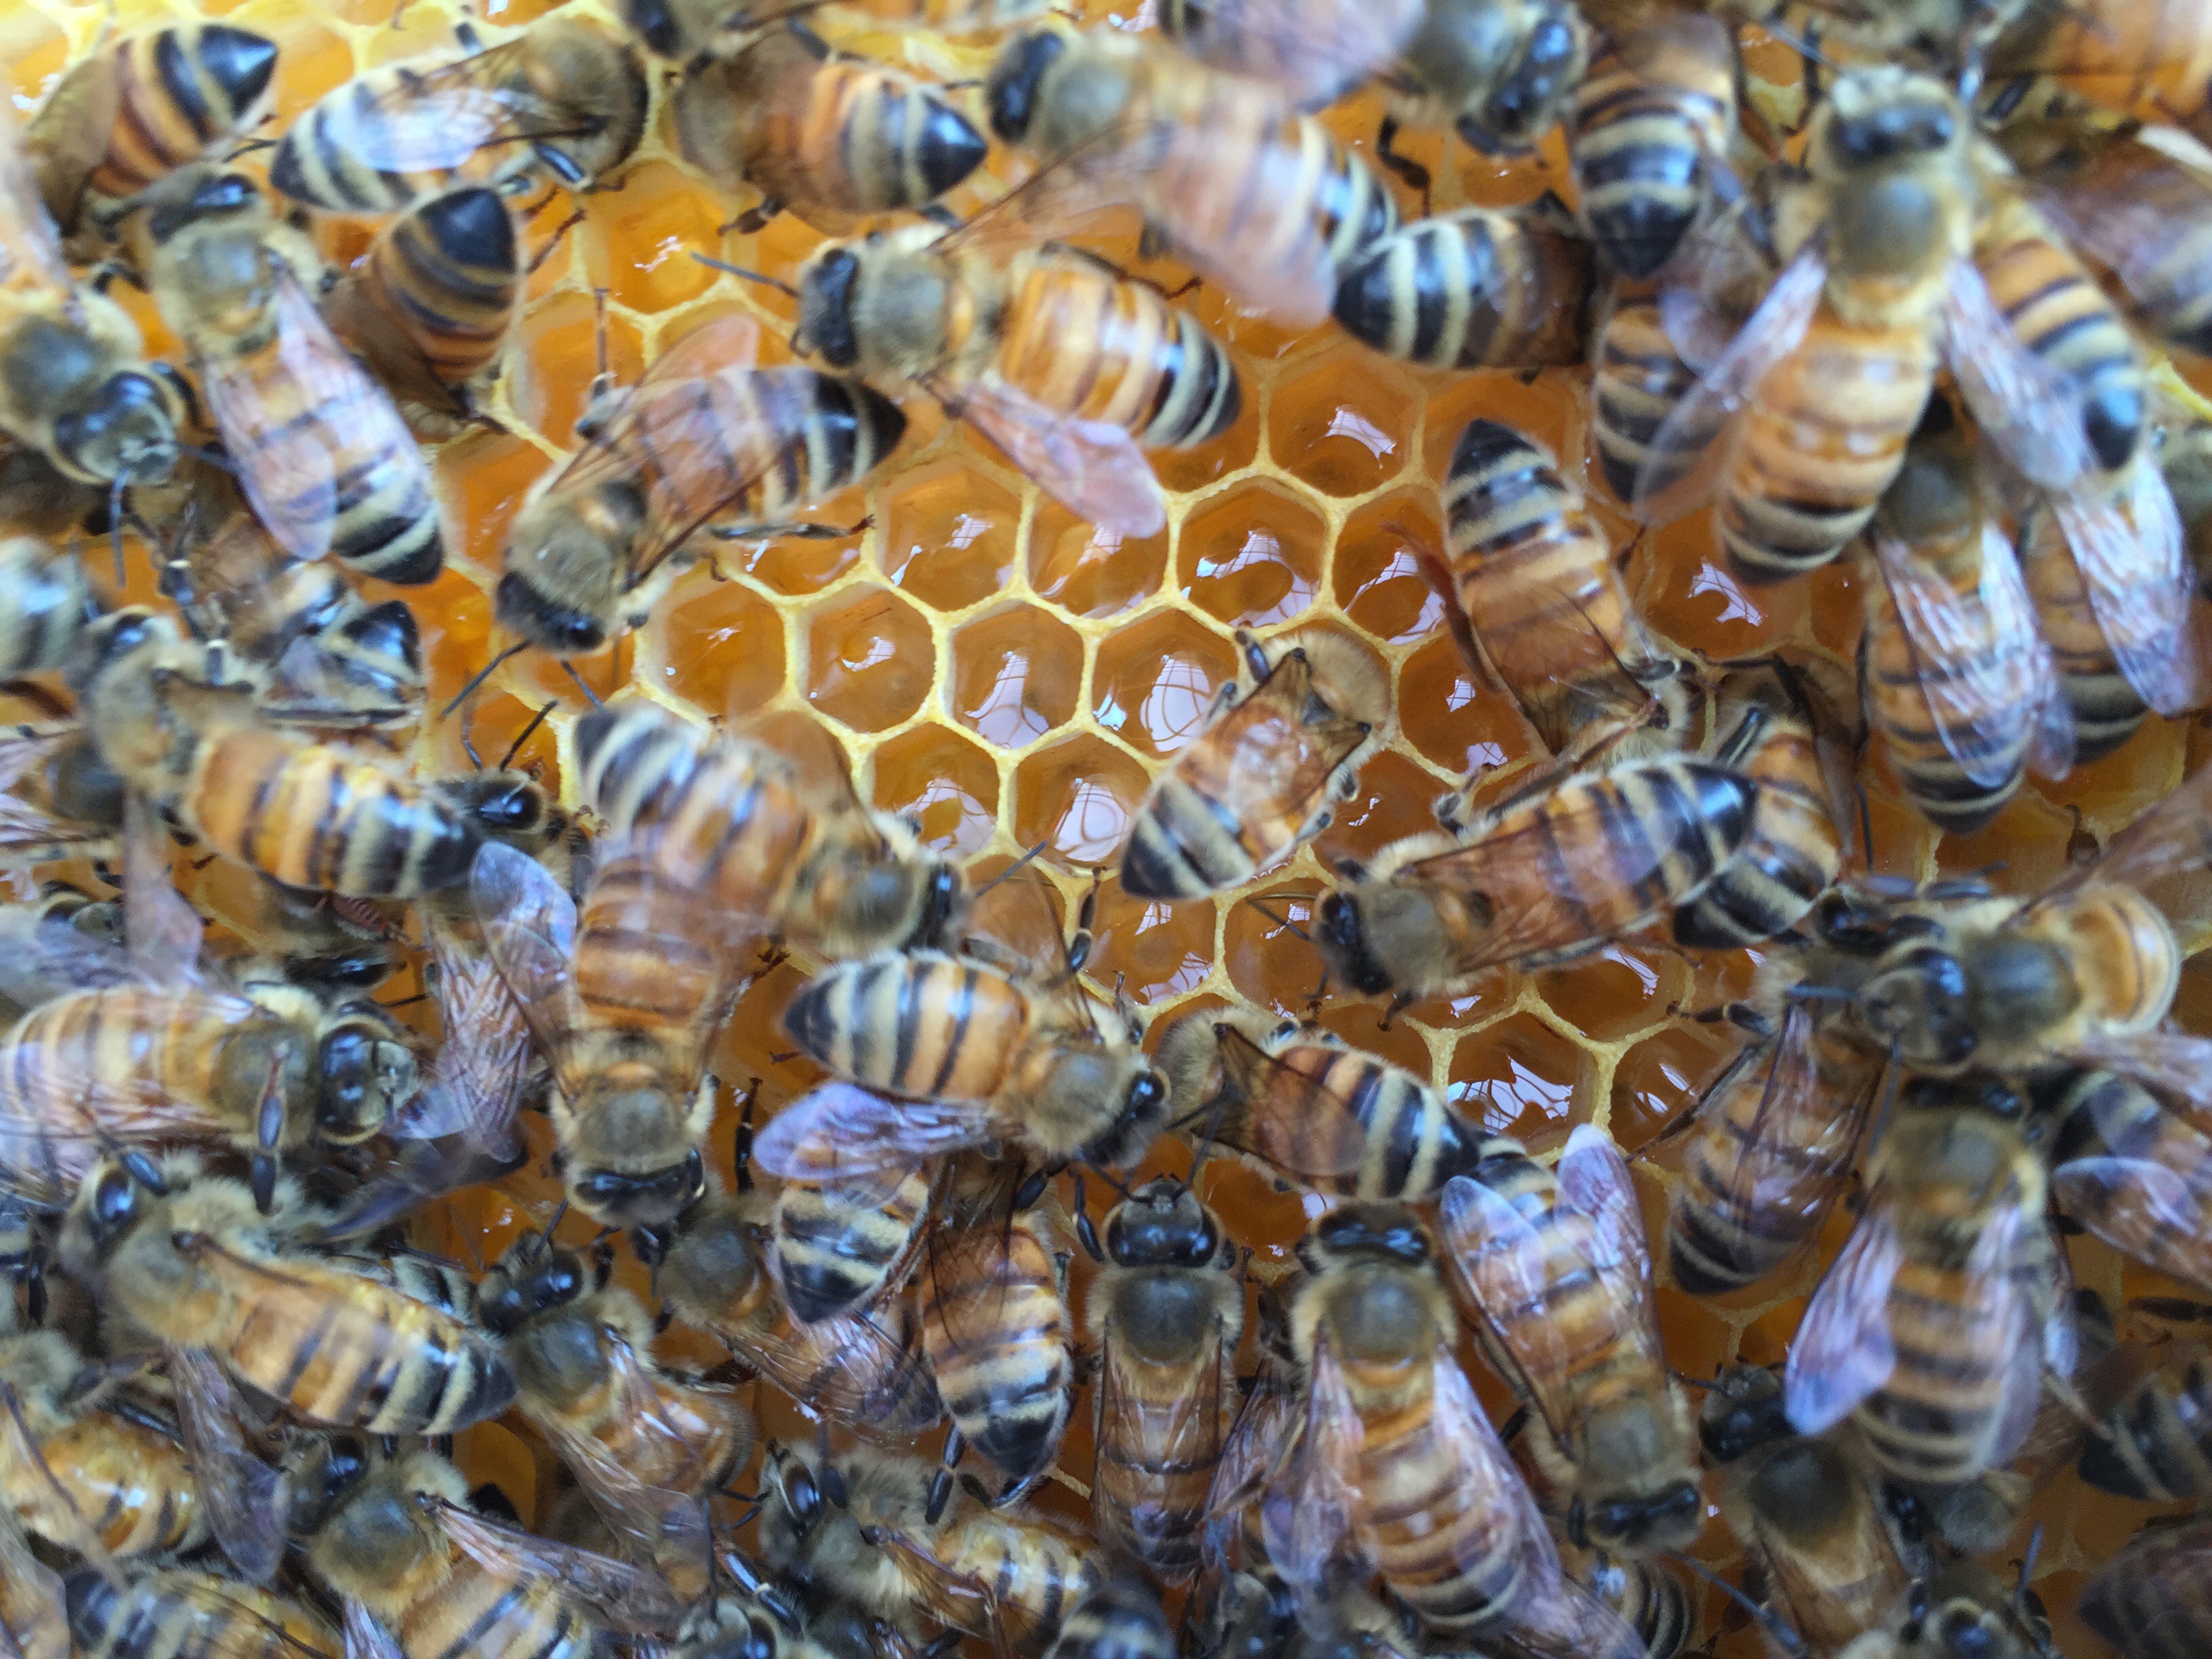 Bees' society